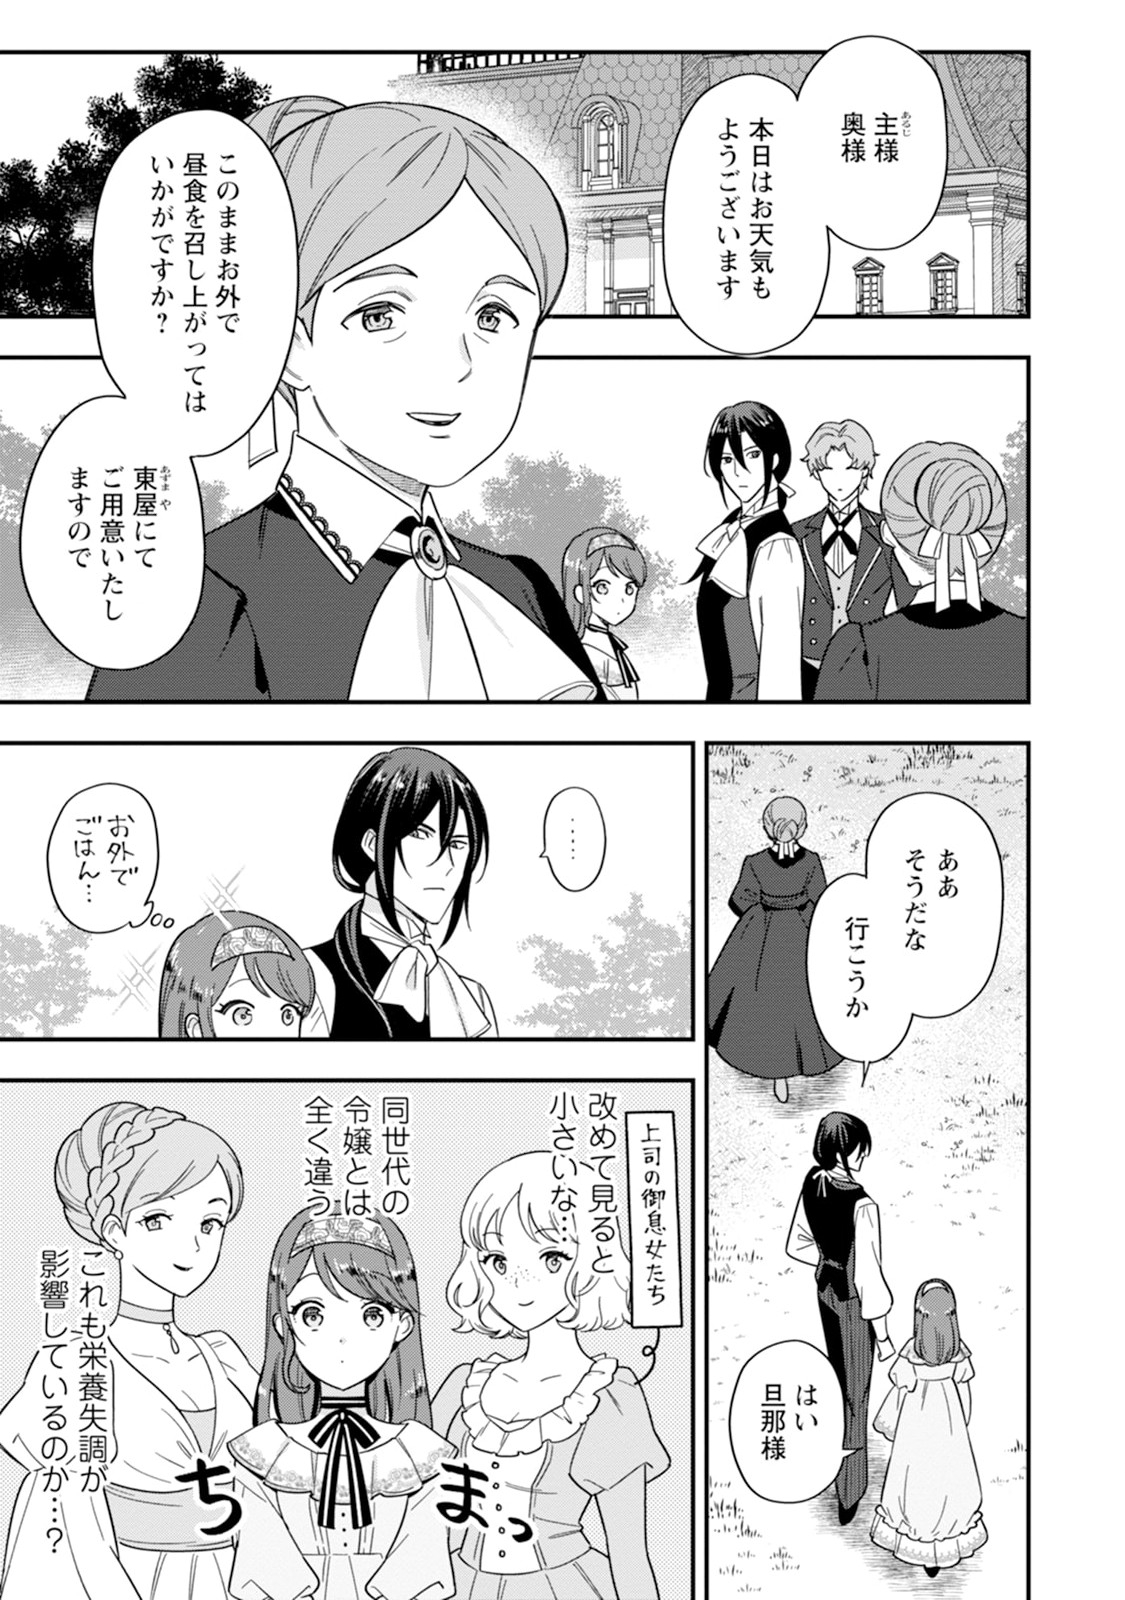 Aisanai to Iwaremashite mo - Chapter 2 - Page 1